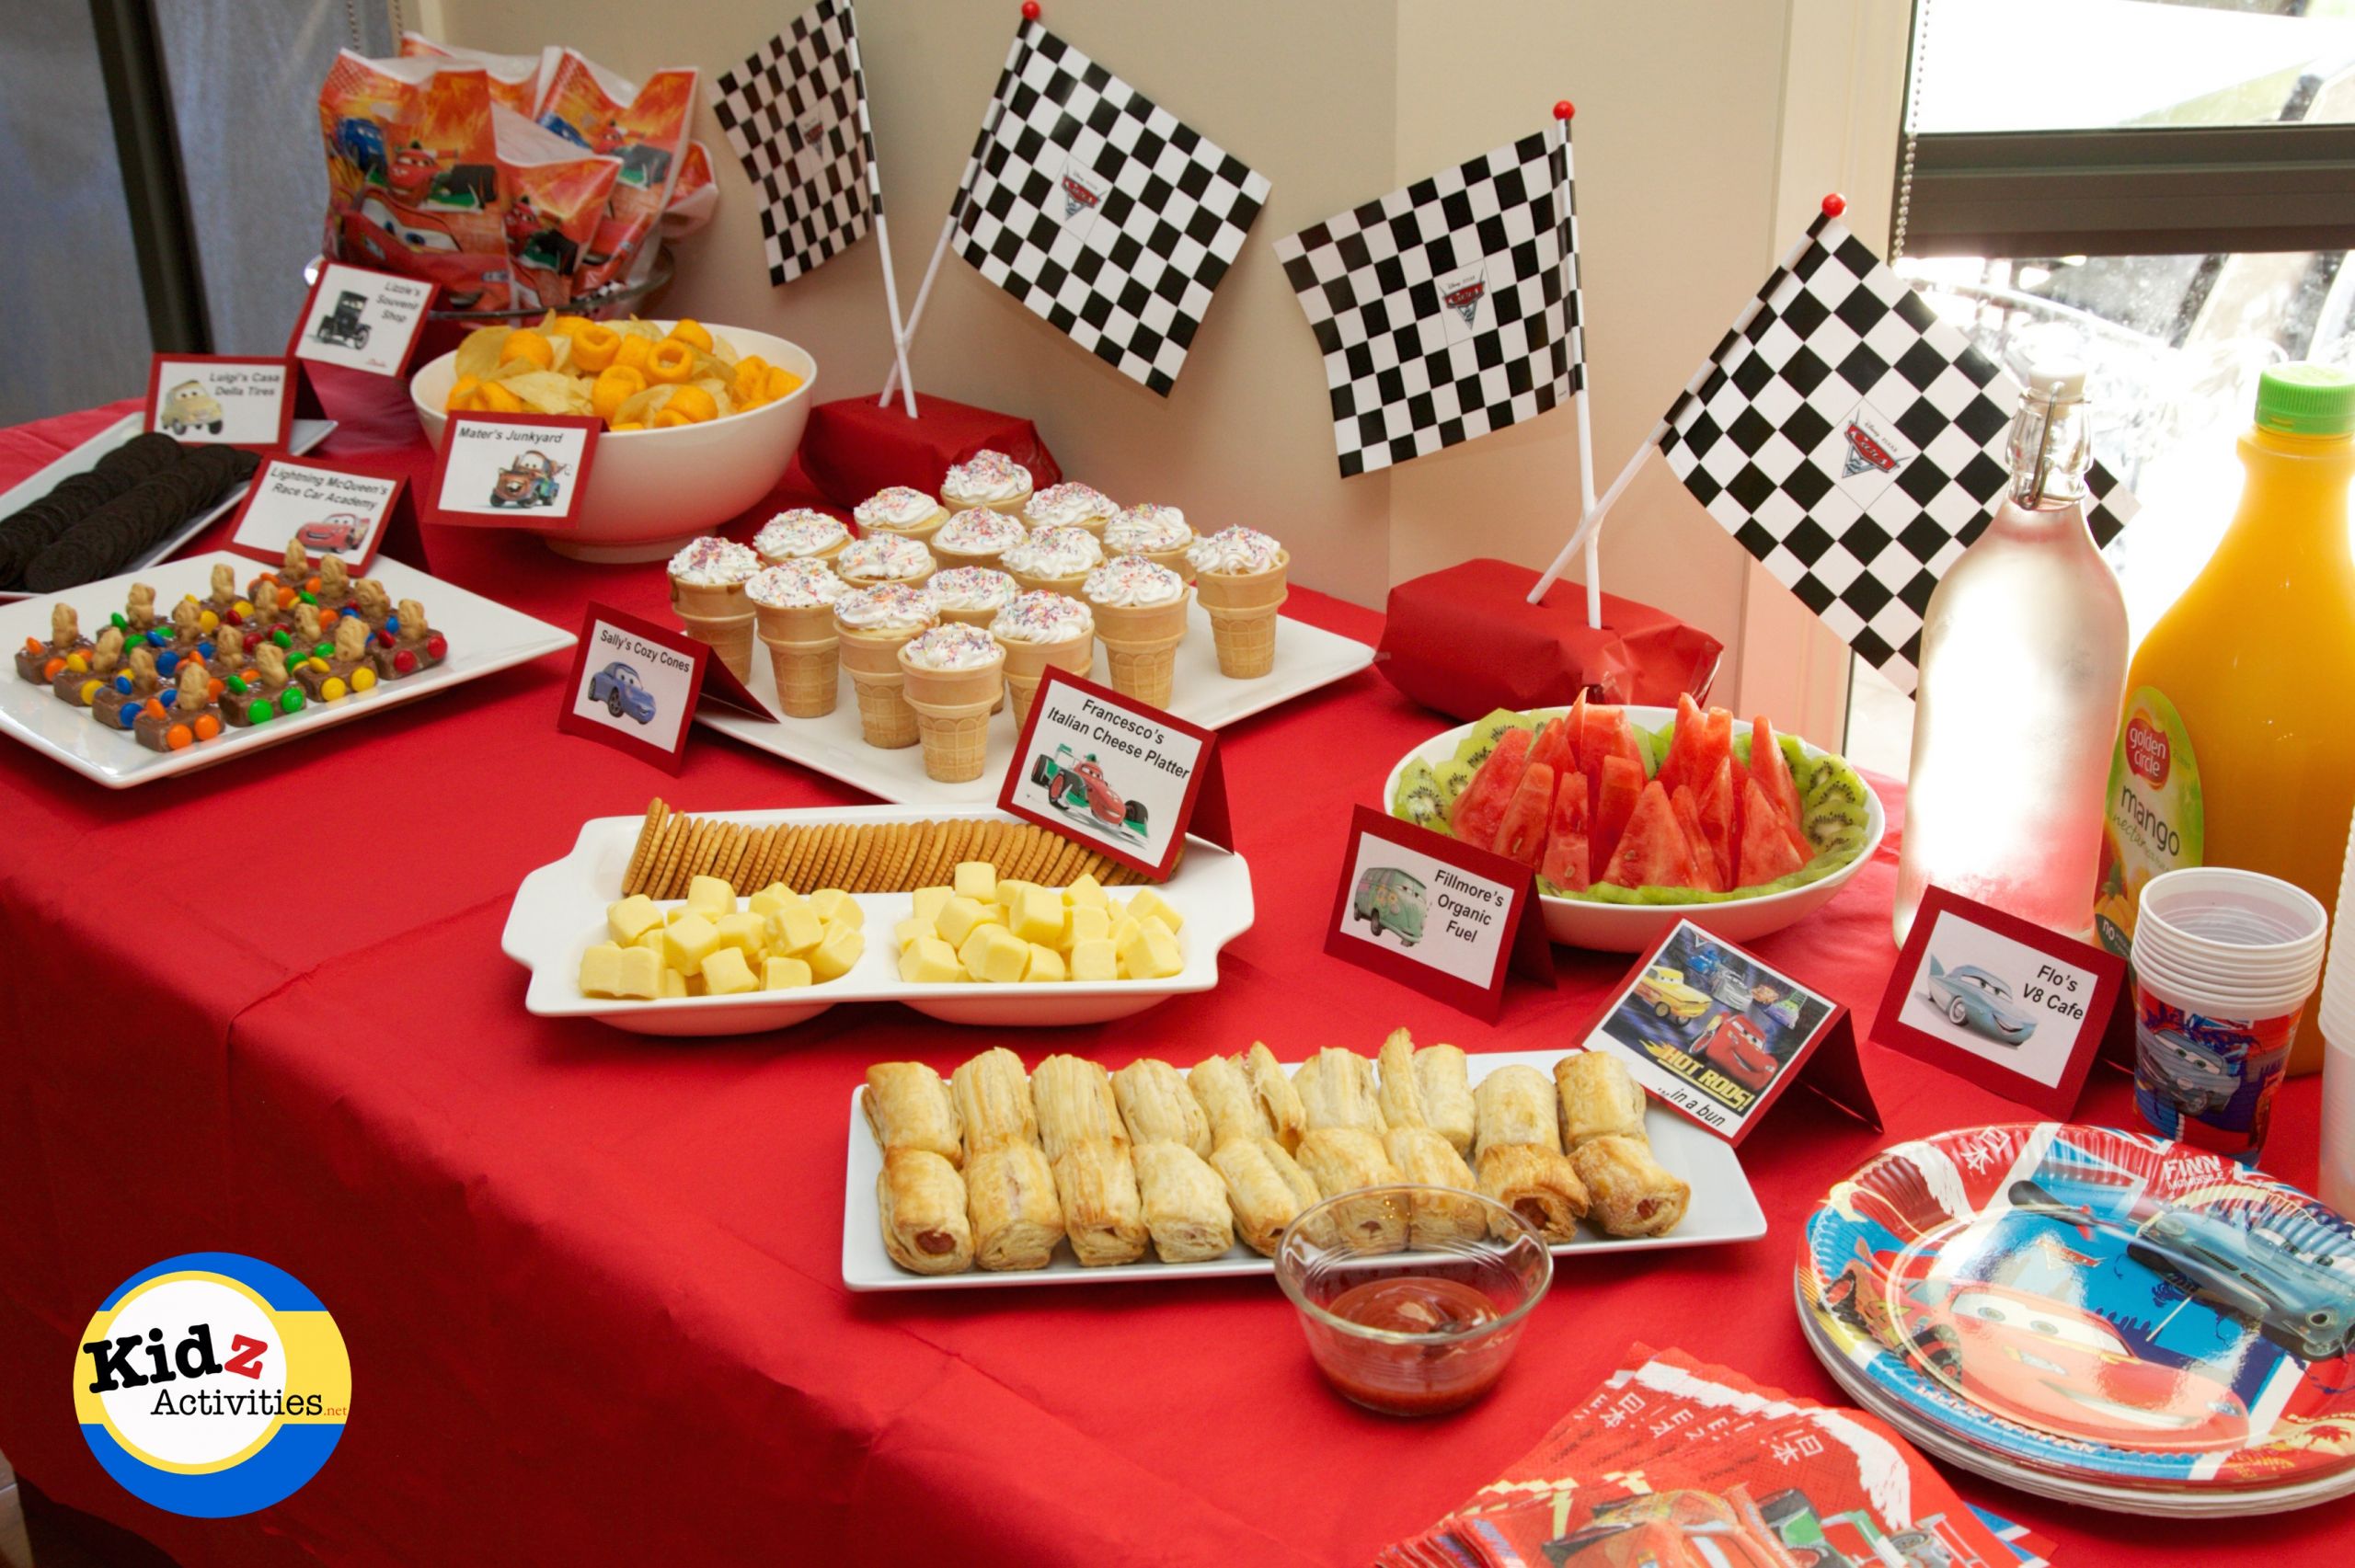 Kids Party Food Ideas Buffet
 Cars birthday party buffet spread Kidz Activities